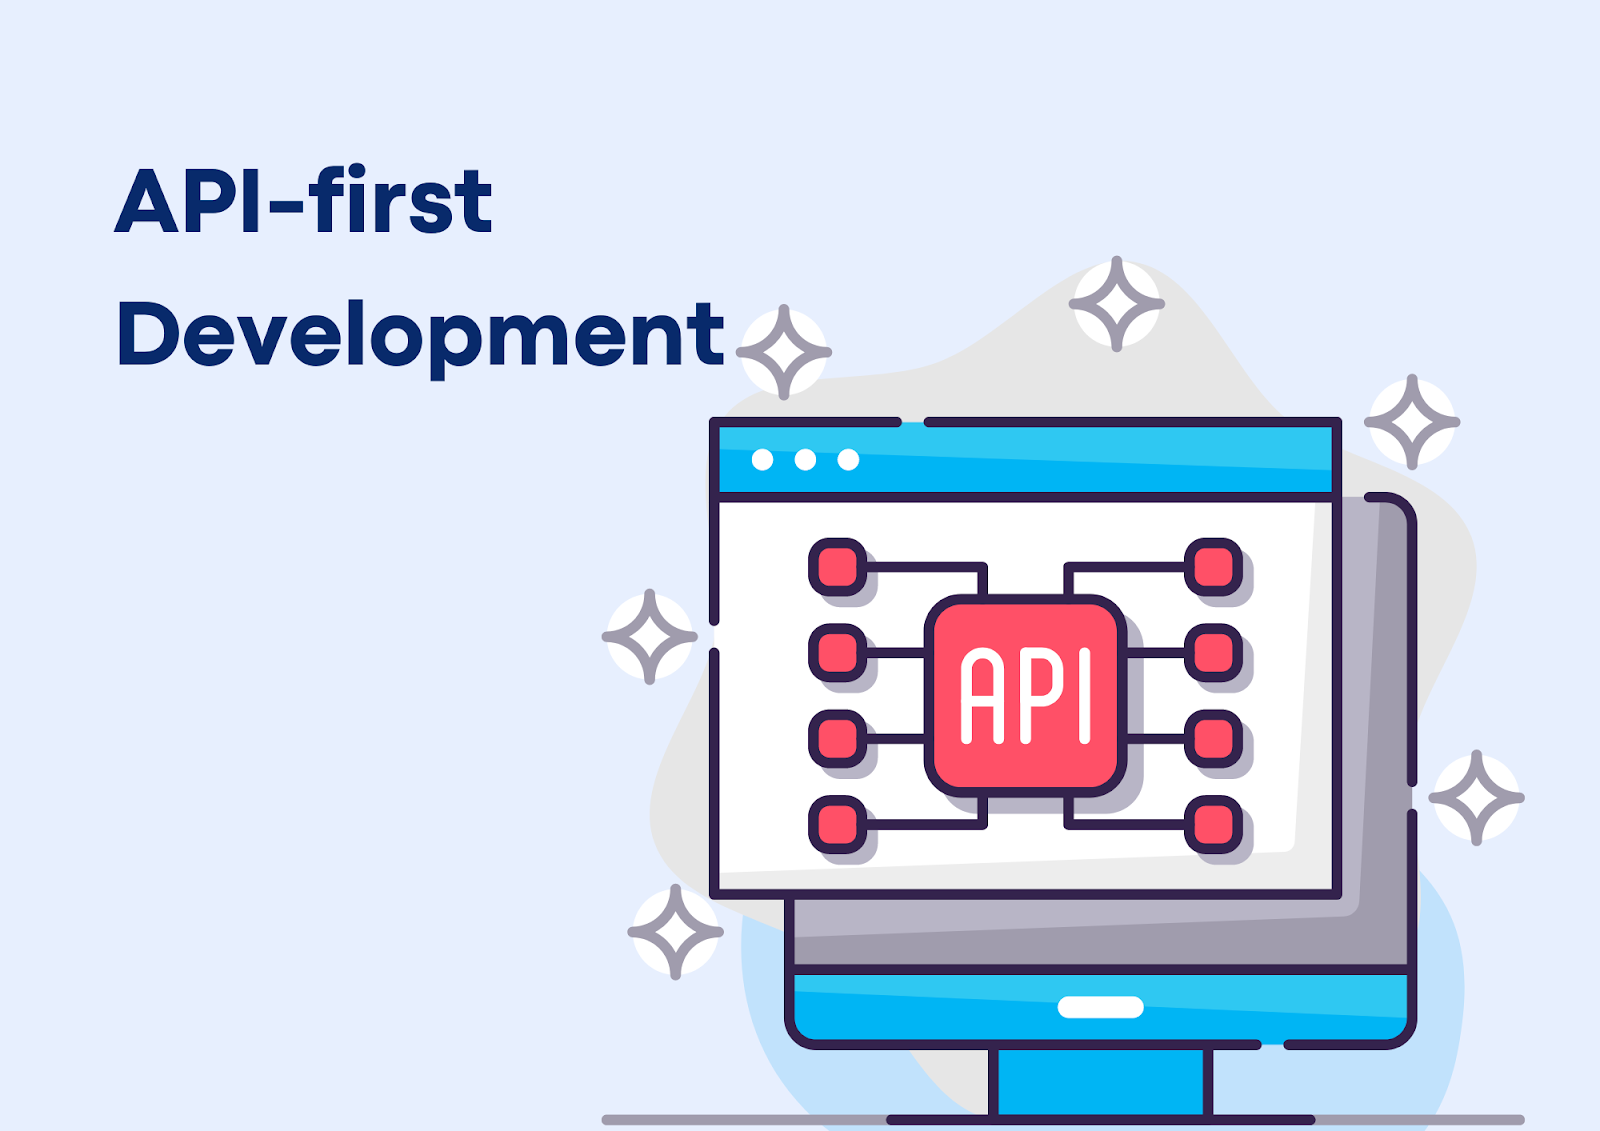 API-first Development
